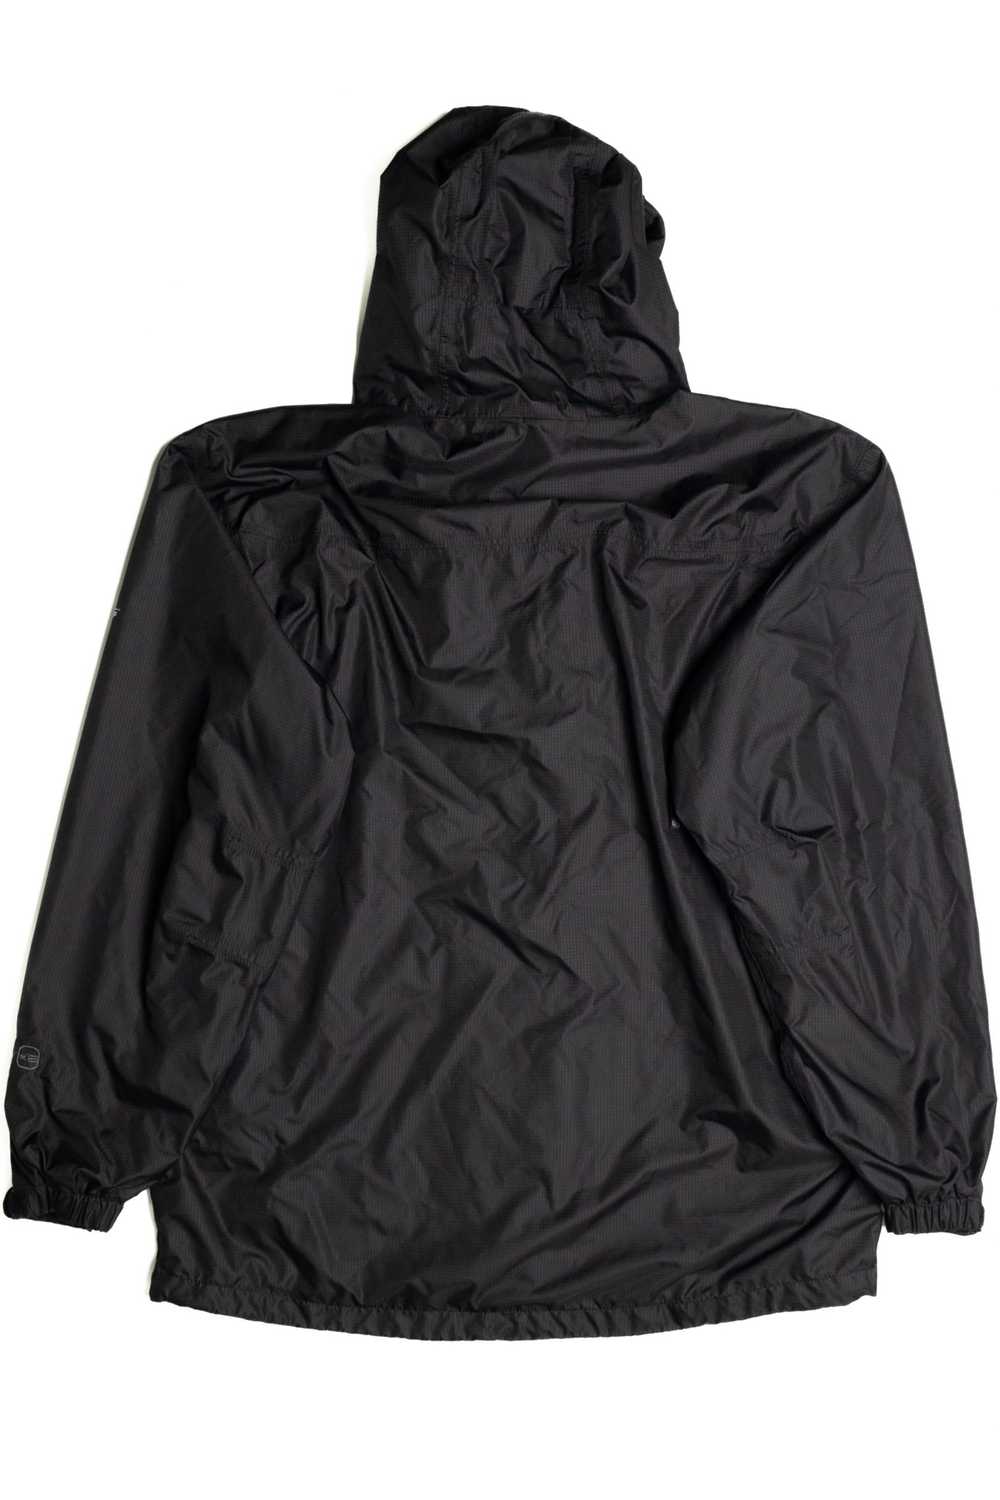 Waterproof Lightweight Jacket - image 2